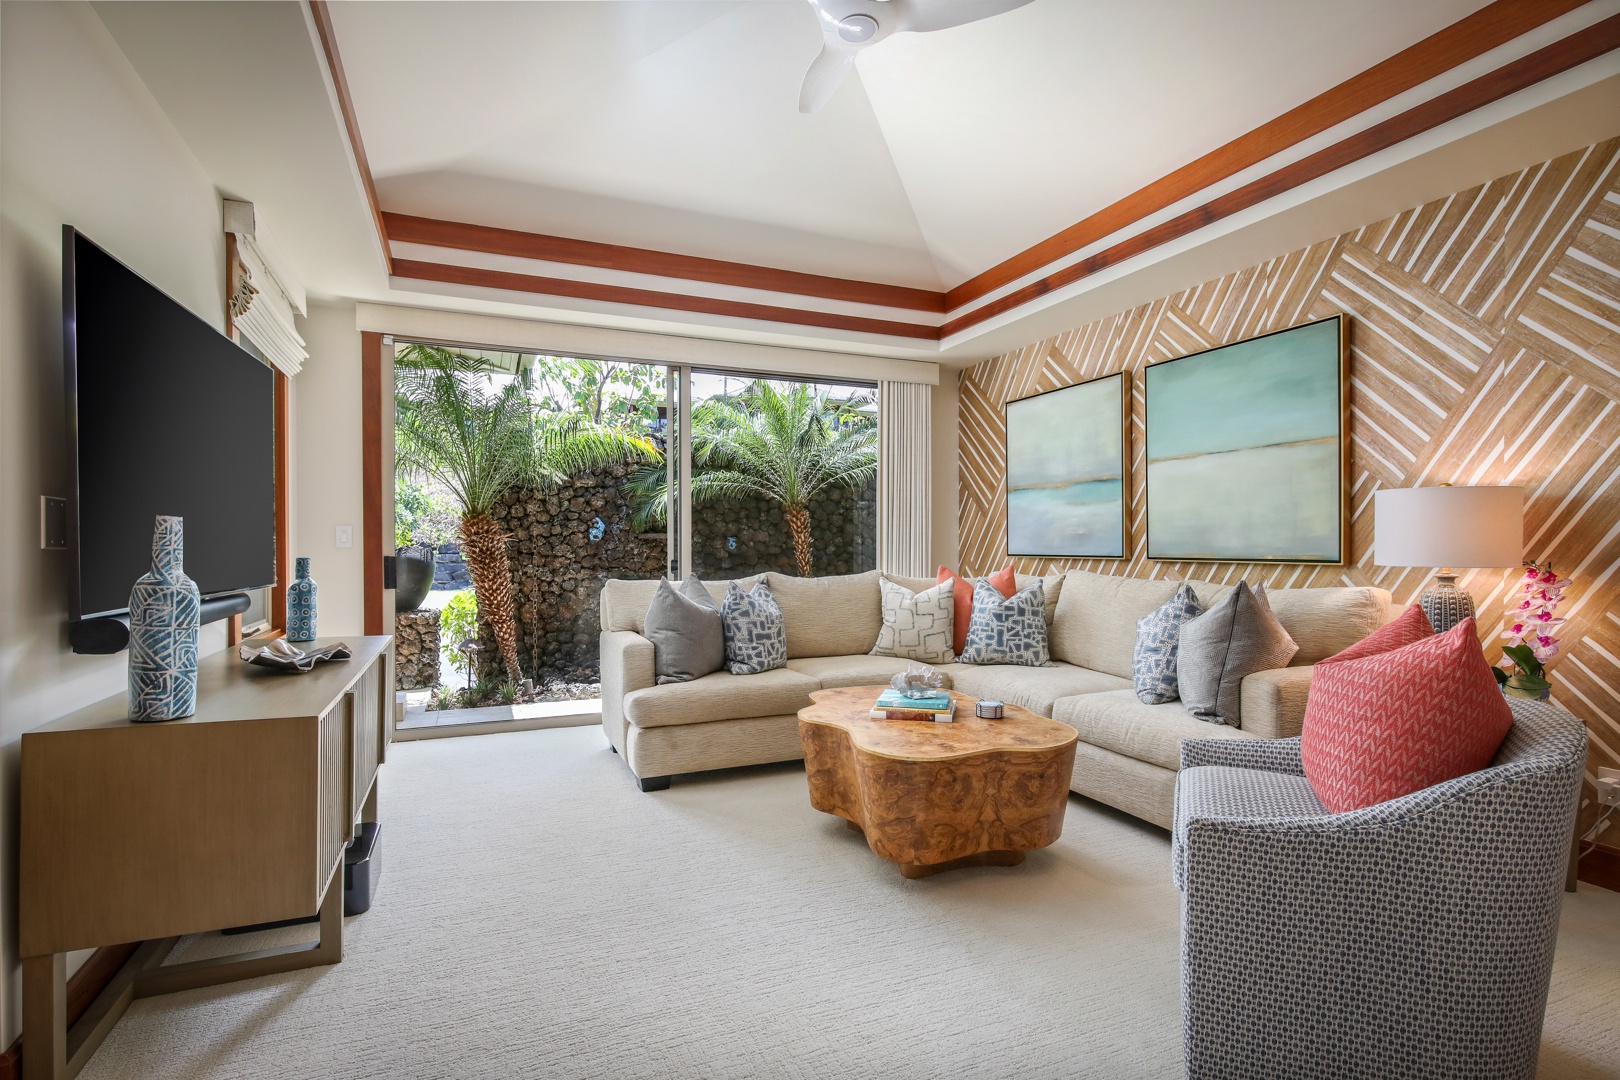 Kailua Kona Vacation Rentals, 4BD Hainoa Estate (122) at Four Seasons Resort at Hualalai - Media room with 65” Smart flat screen television, ample seating and sliding doors to the outdoors.